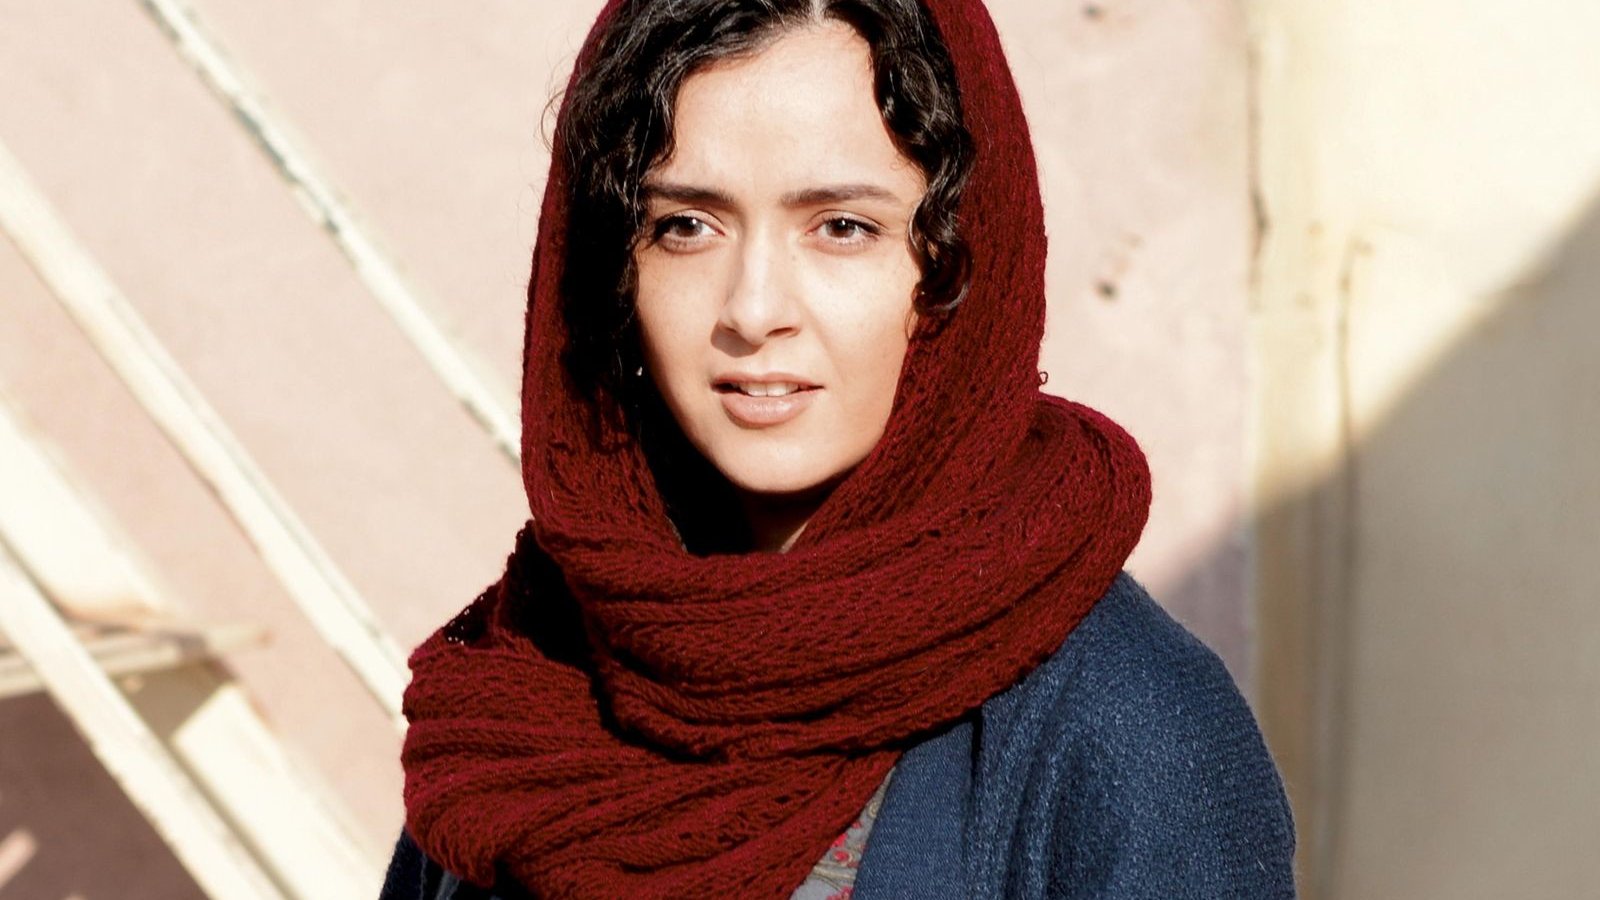 Taraneh Alidoosti, l'attrice iraniana esce dal carcere grazie a una cauzione di 225mila dollari